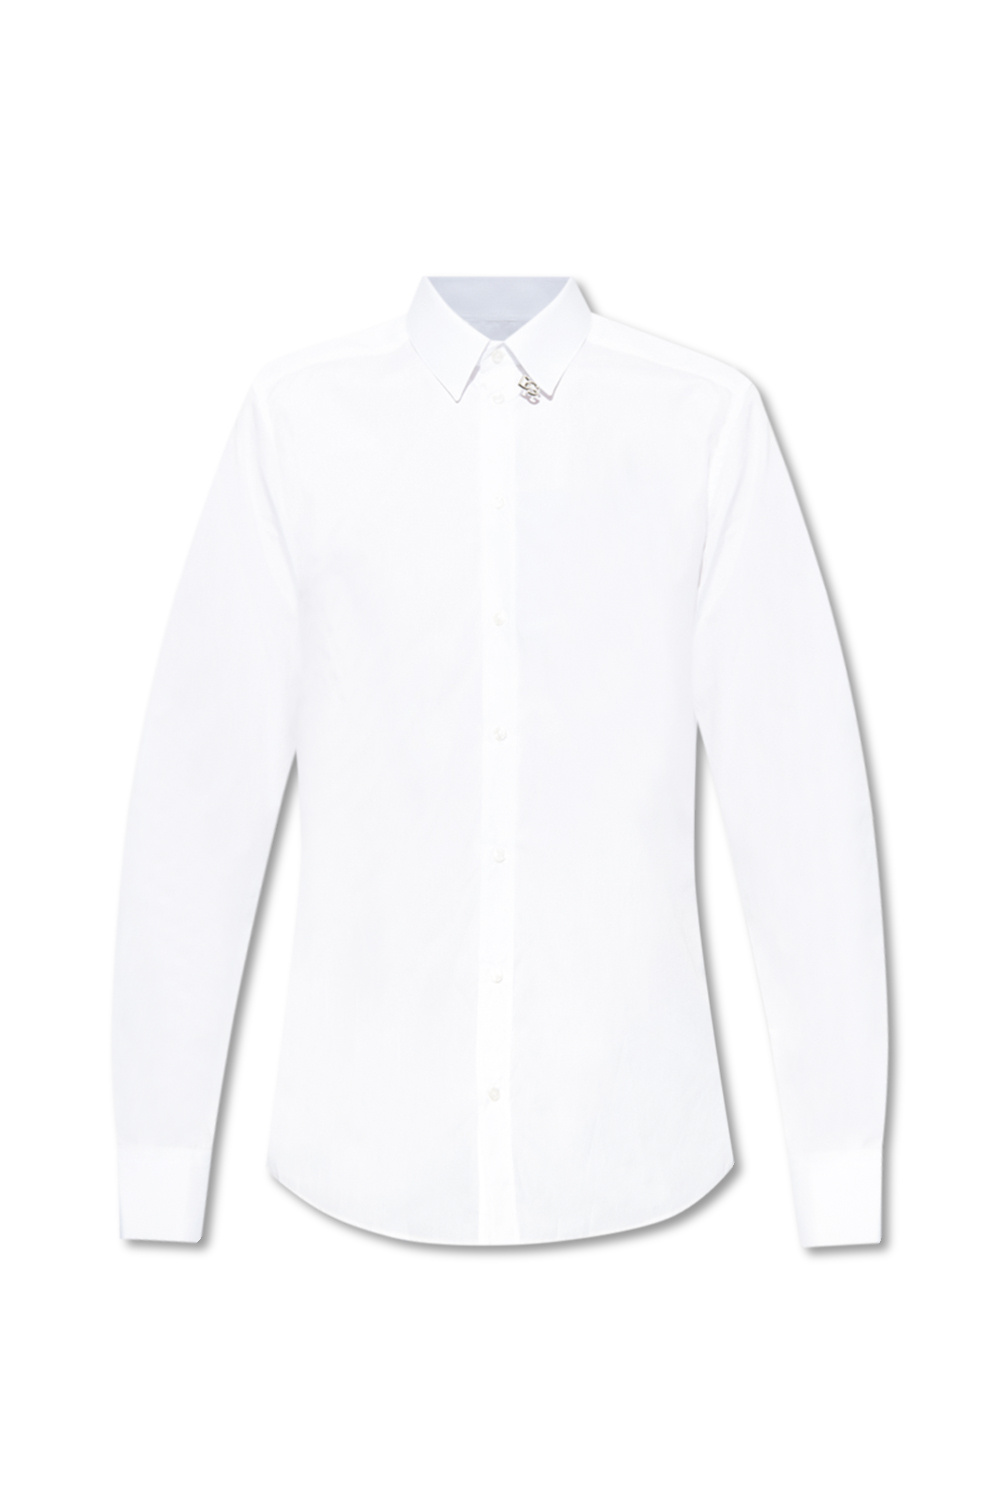 Dolce & Gabbana satin trim dinner suit Shirt with logo